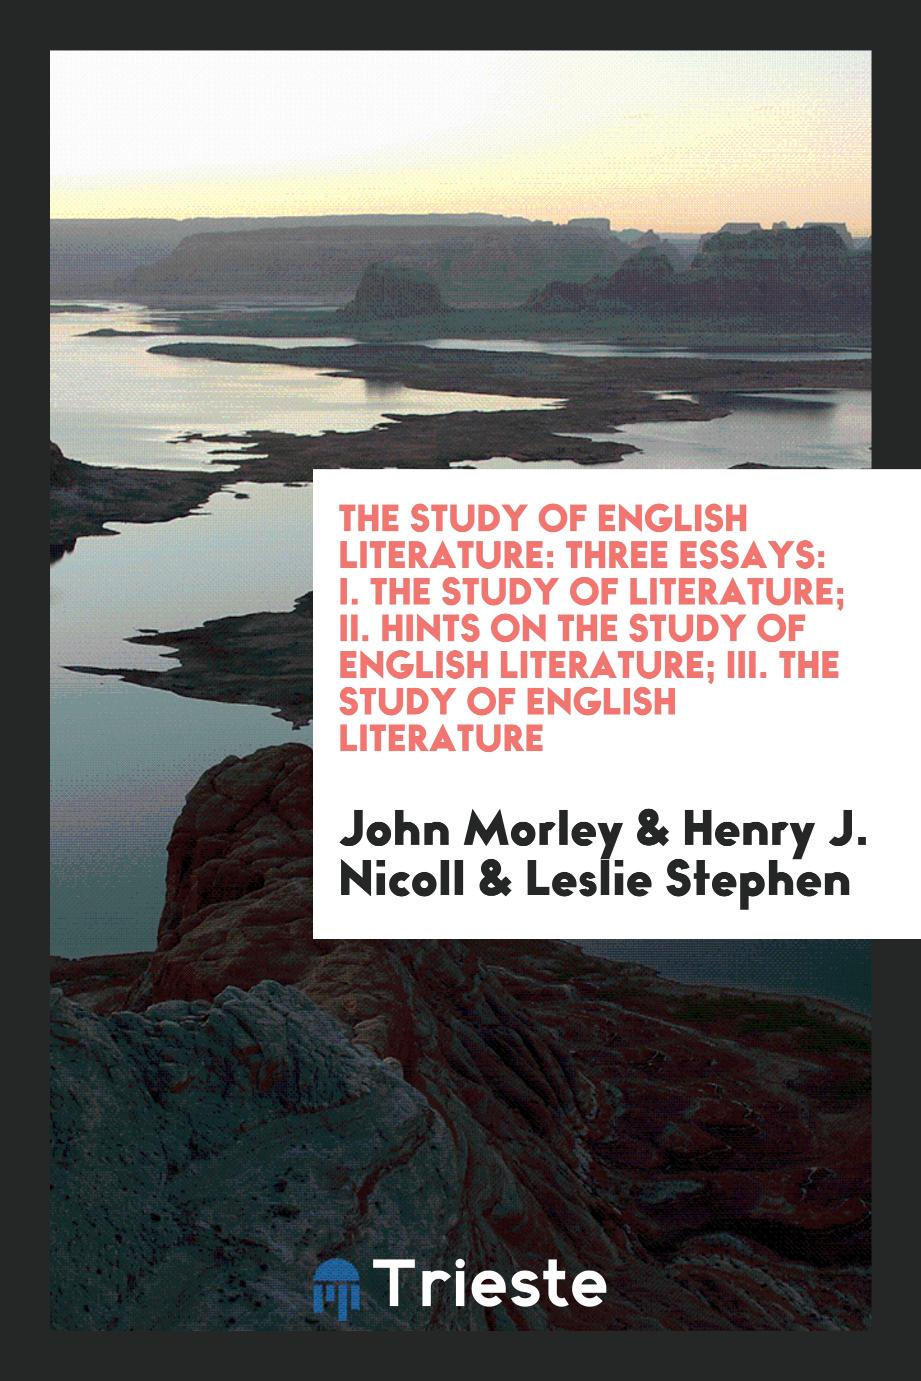 The Study of English Literature: Three Essays: I. The Study of Literature; II. Hints on the Study of English Literature; III. The Study of English Literature